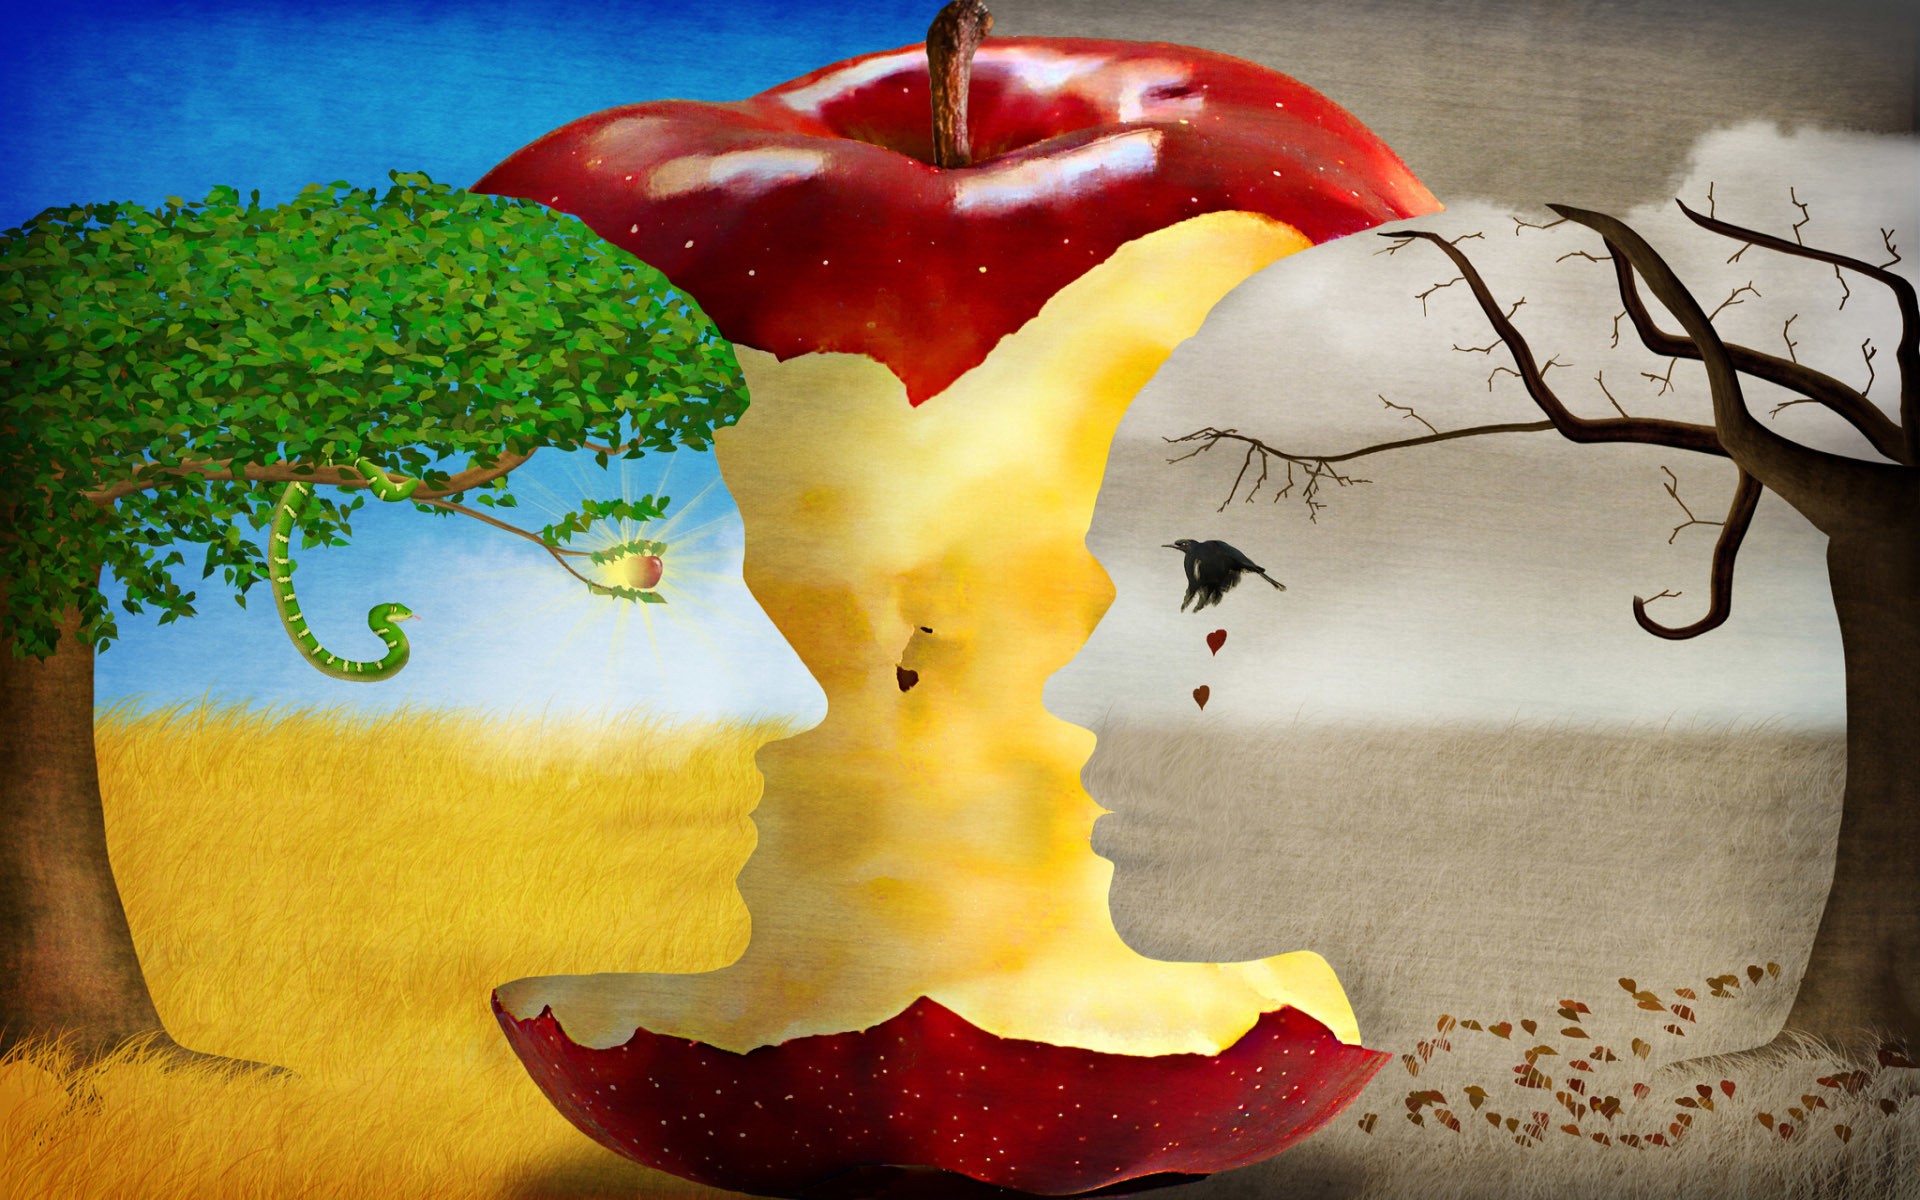 Digital Art Artwork Women Trees Apples Leaves Eyes Tears Snake Crow Summer Fall Field Fruit Birds Op 1920x1200